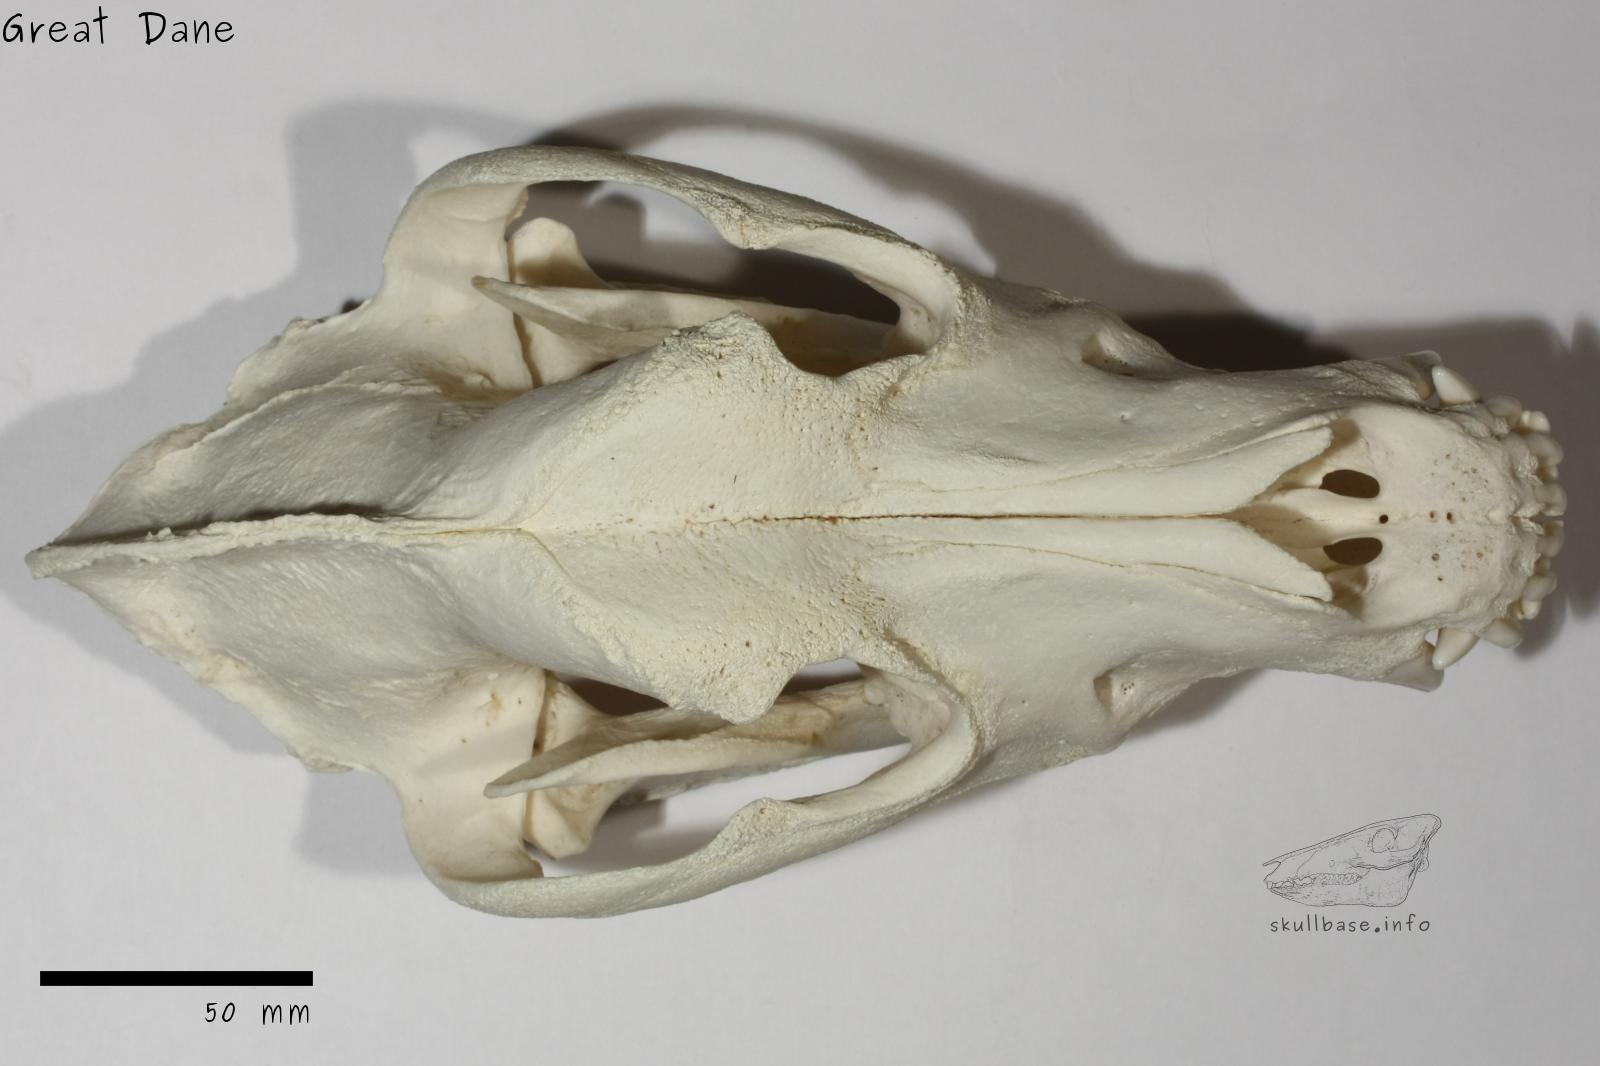 Great Dane (Canis lupus familiaris) skull dorsal view